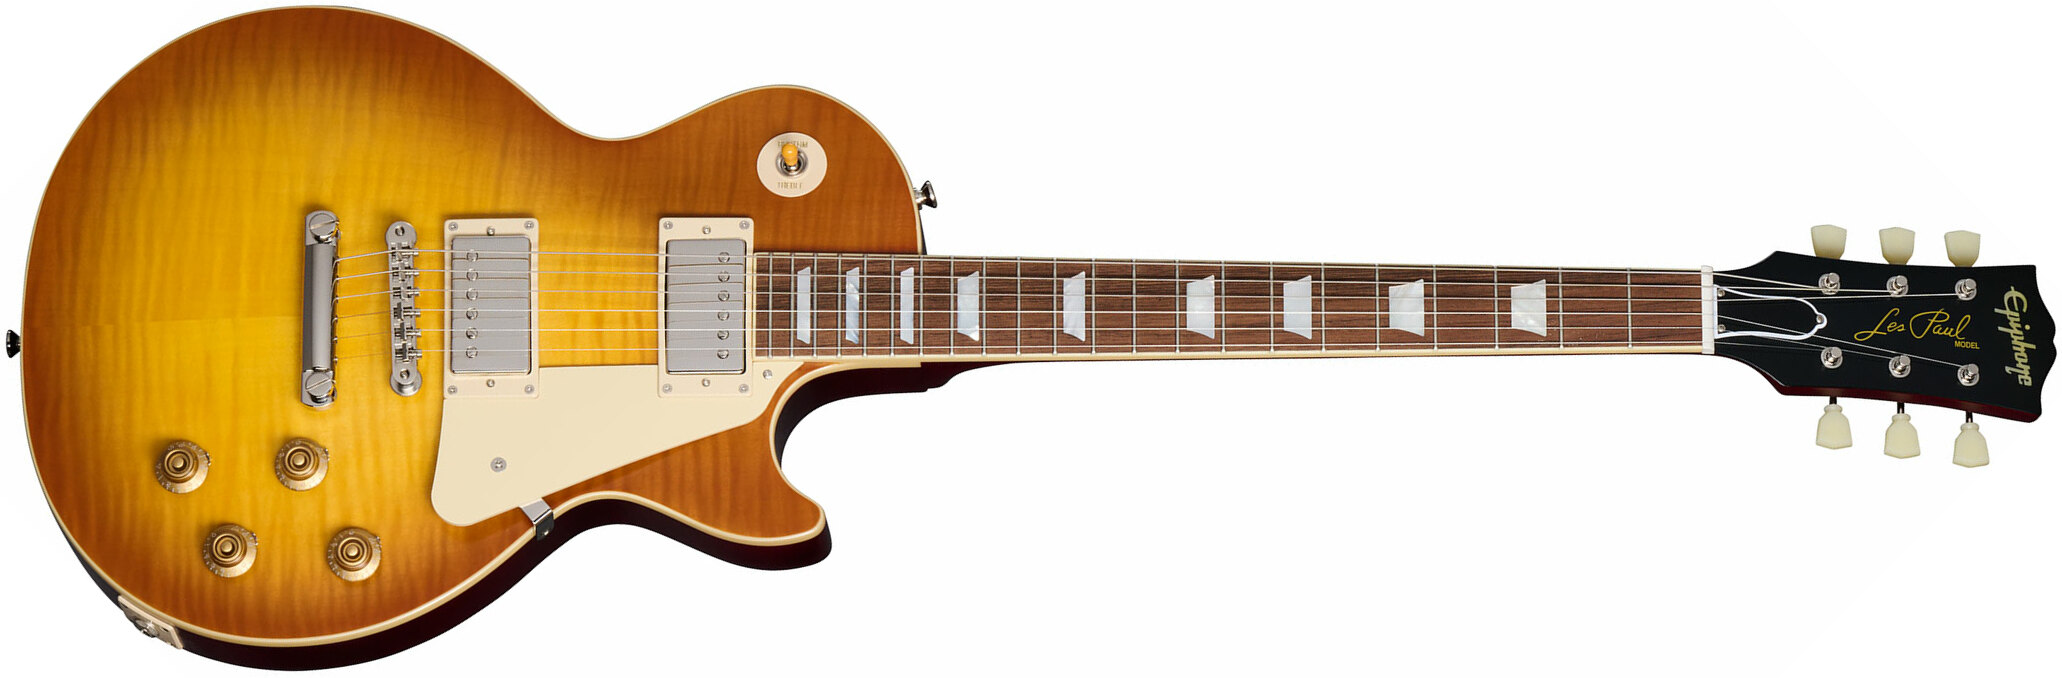 Epiphone 1959 Les Paul Standard Inspired By 2h Gibson Ht Lau - Vos Iced Tea Burst - Enkel gesneden elektrische gitaar - Main picture